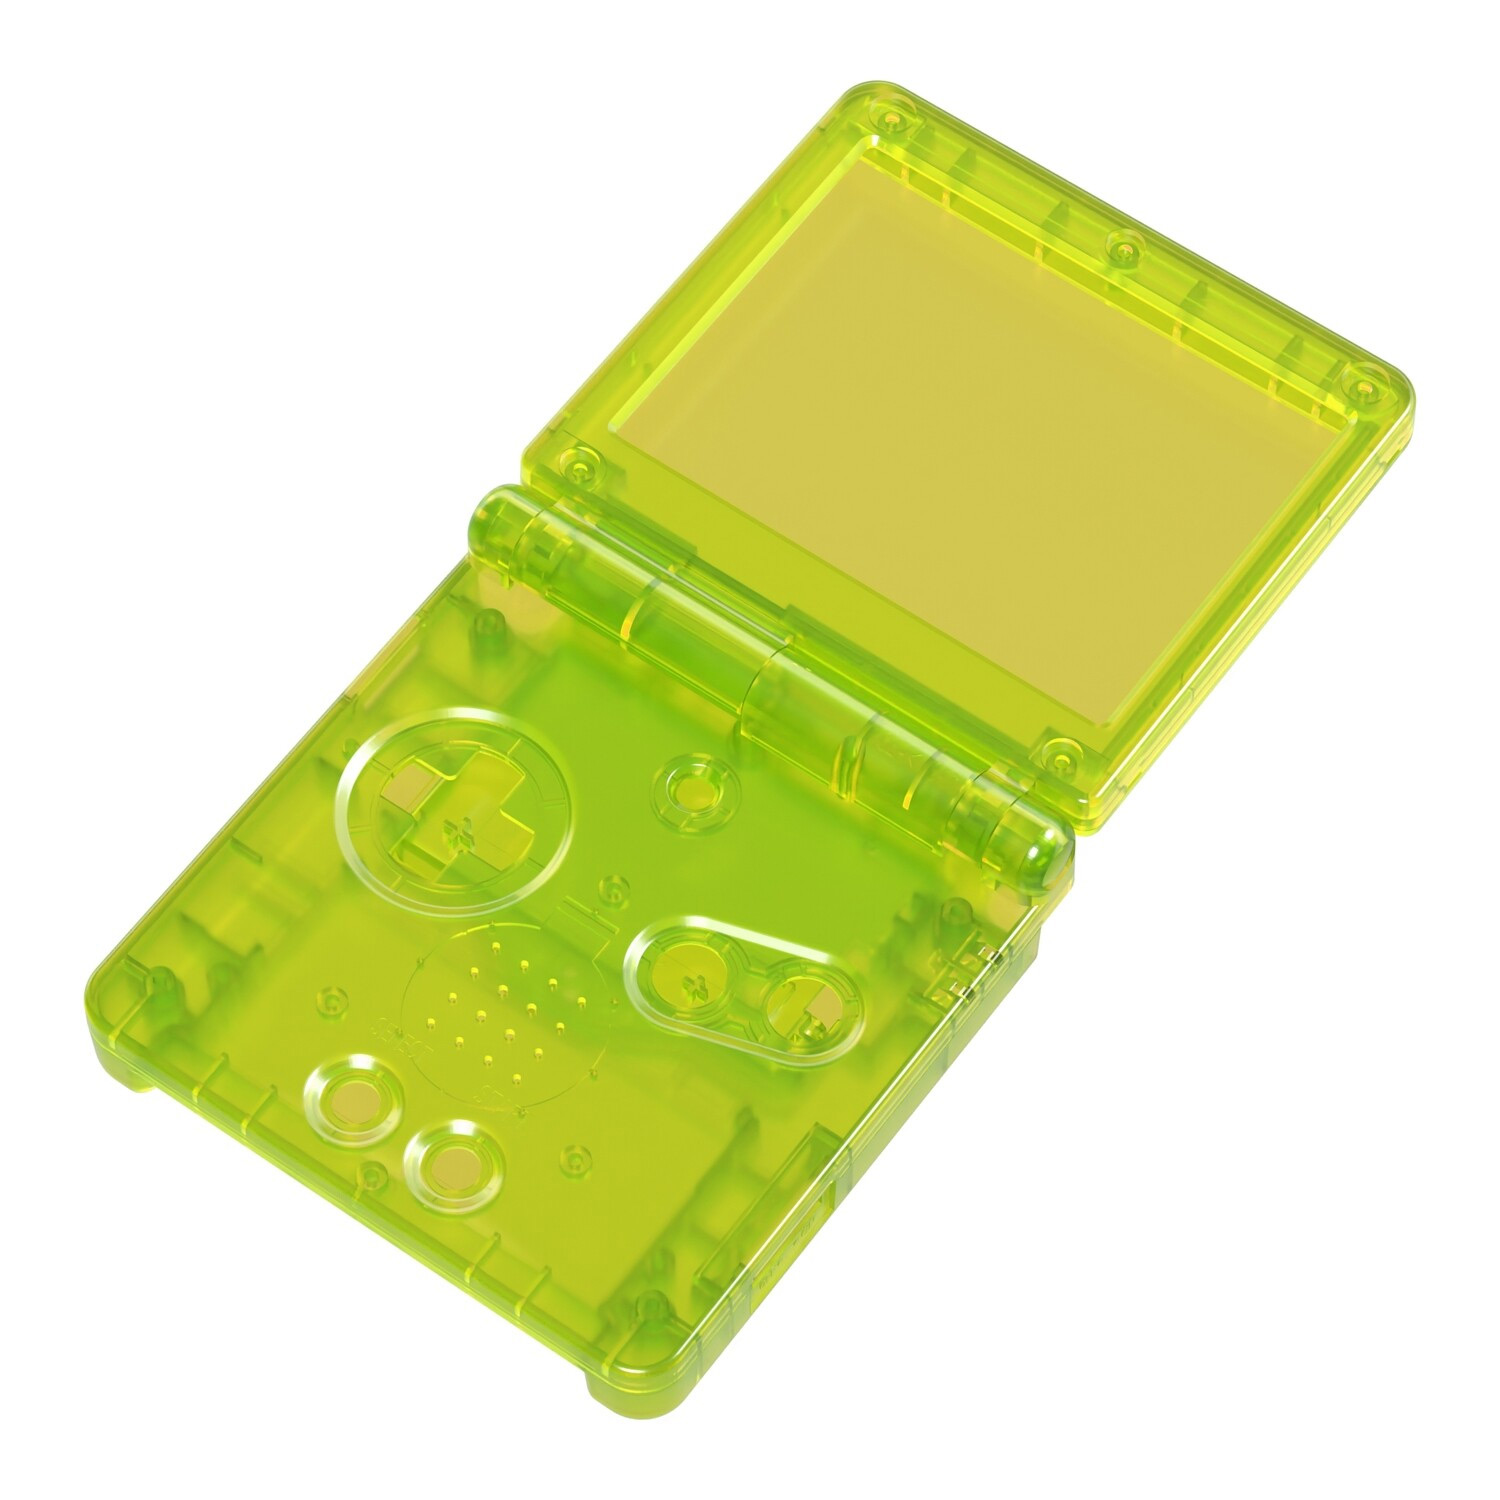 Game Boy Advance SP Gehäuse (Clear Yellow)